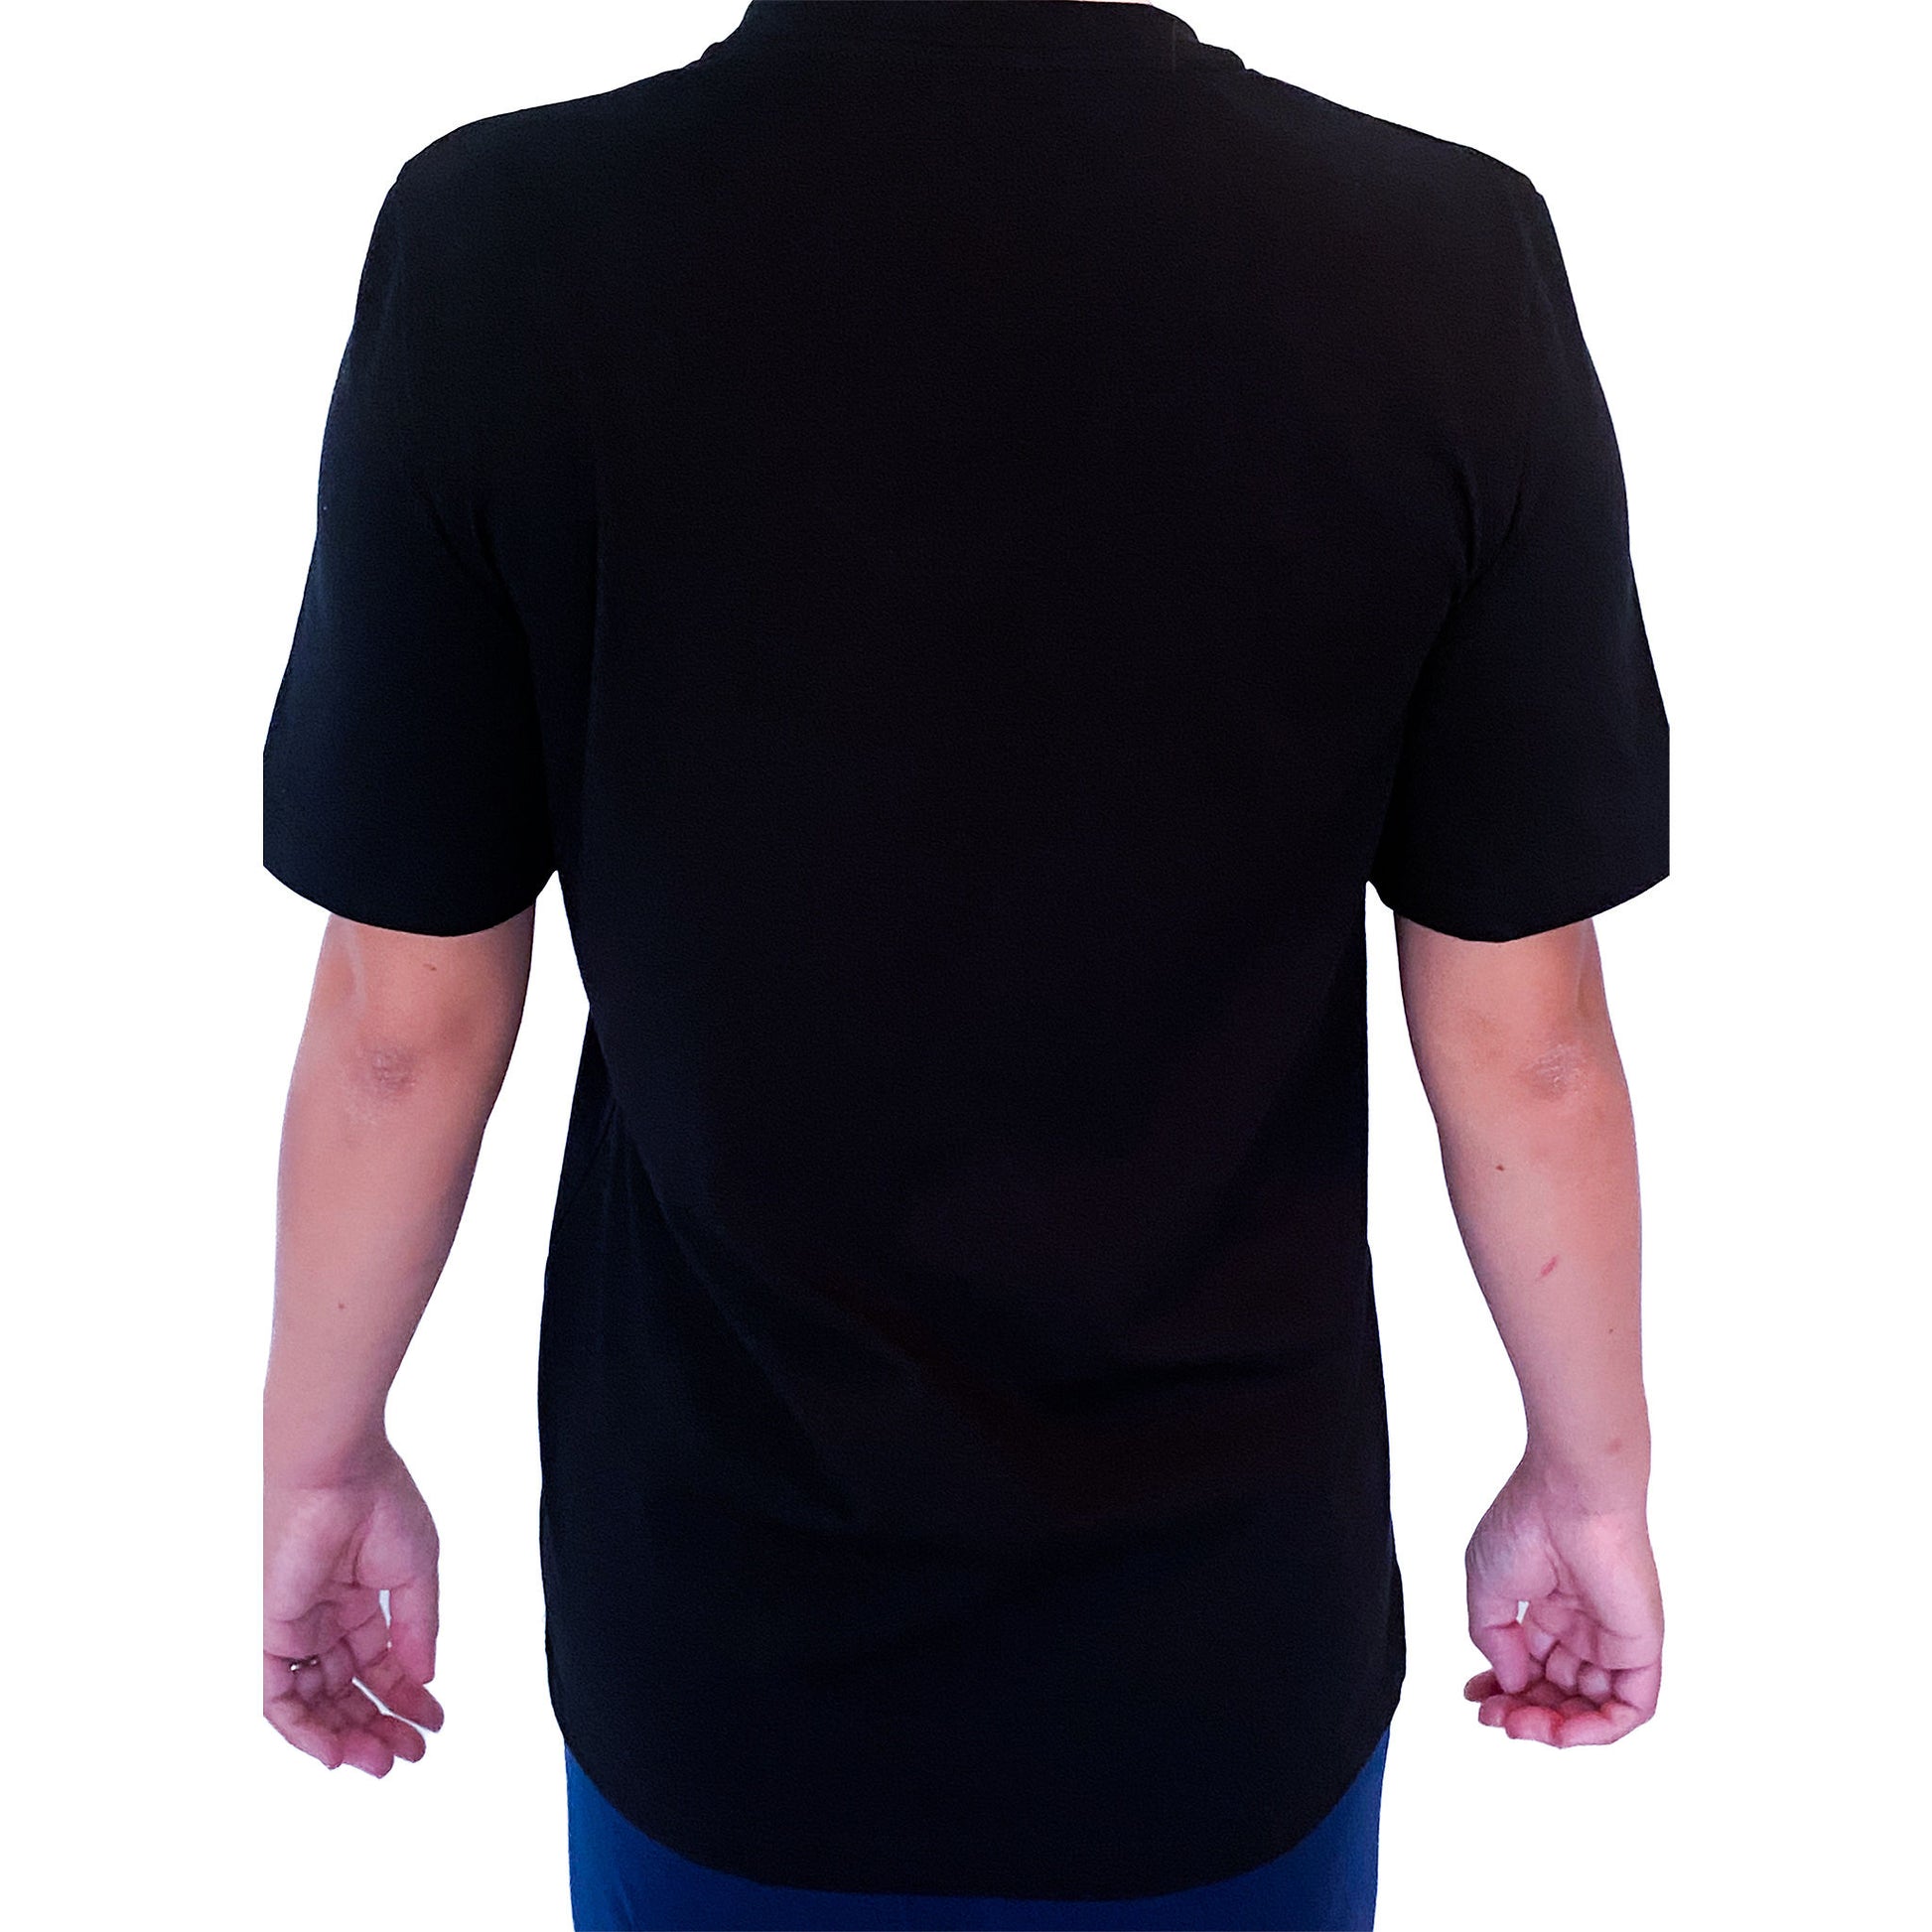 Ethical organic unisex t-shirt Black Crew neck Classic range